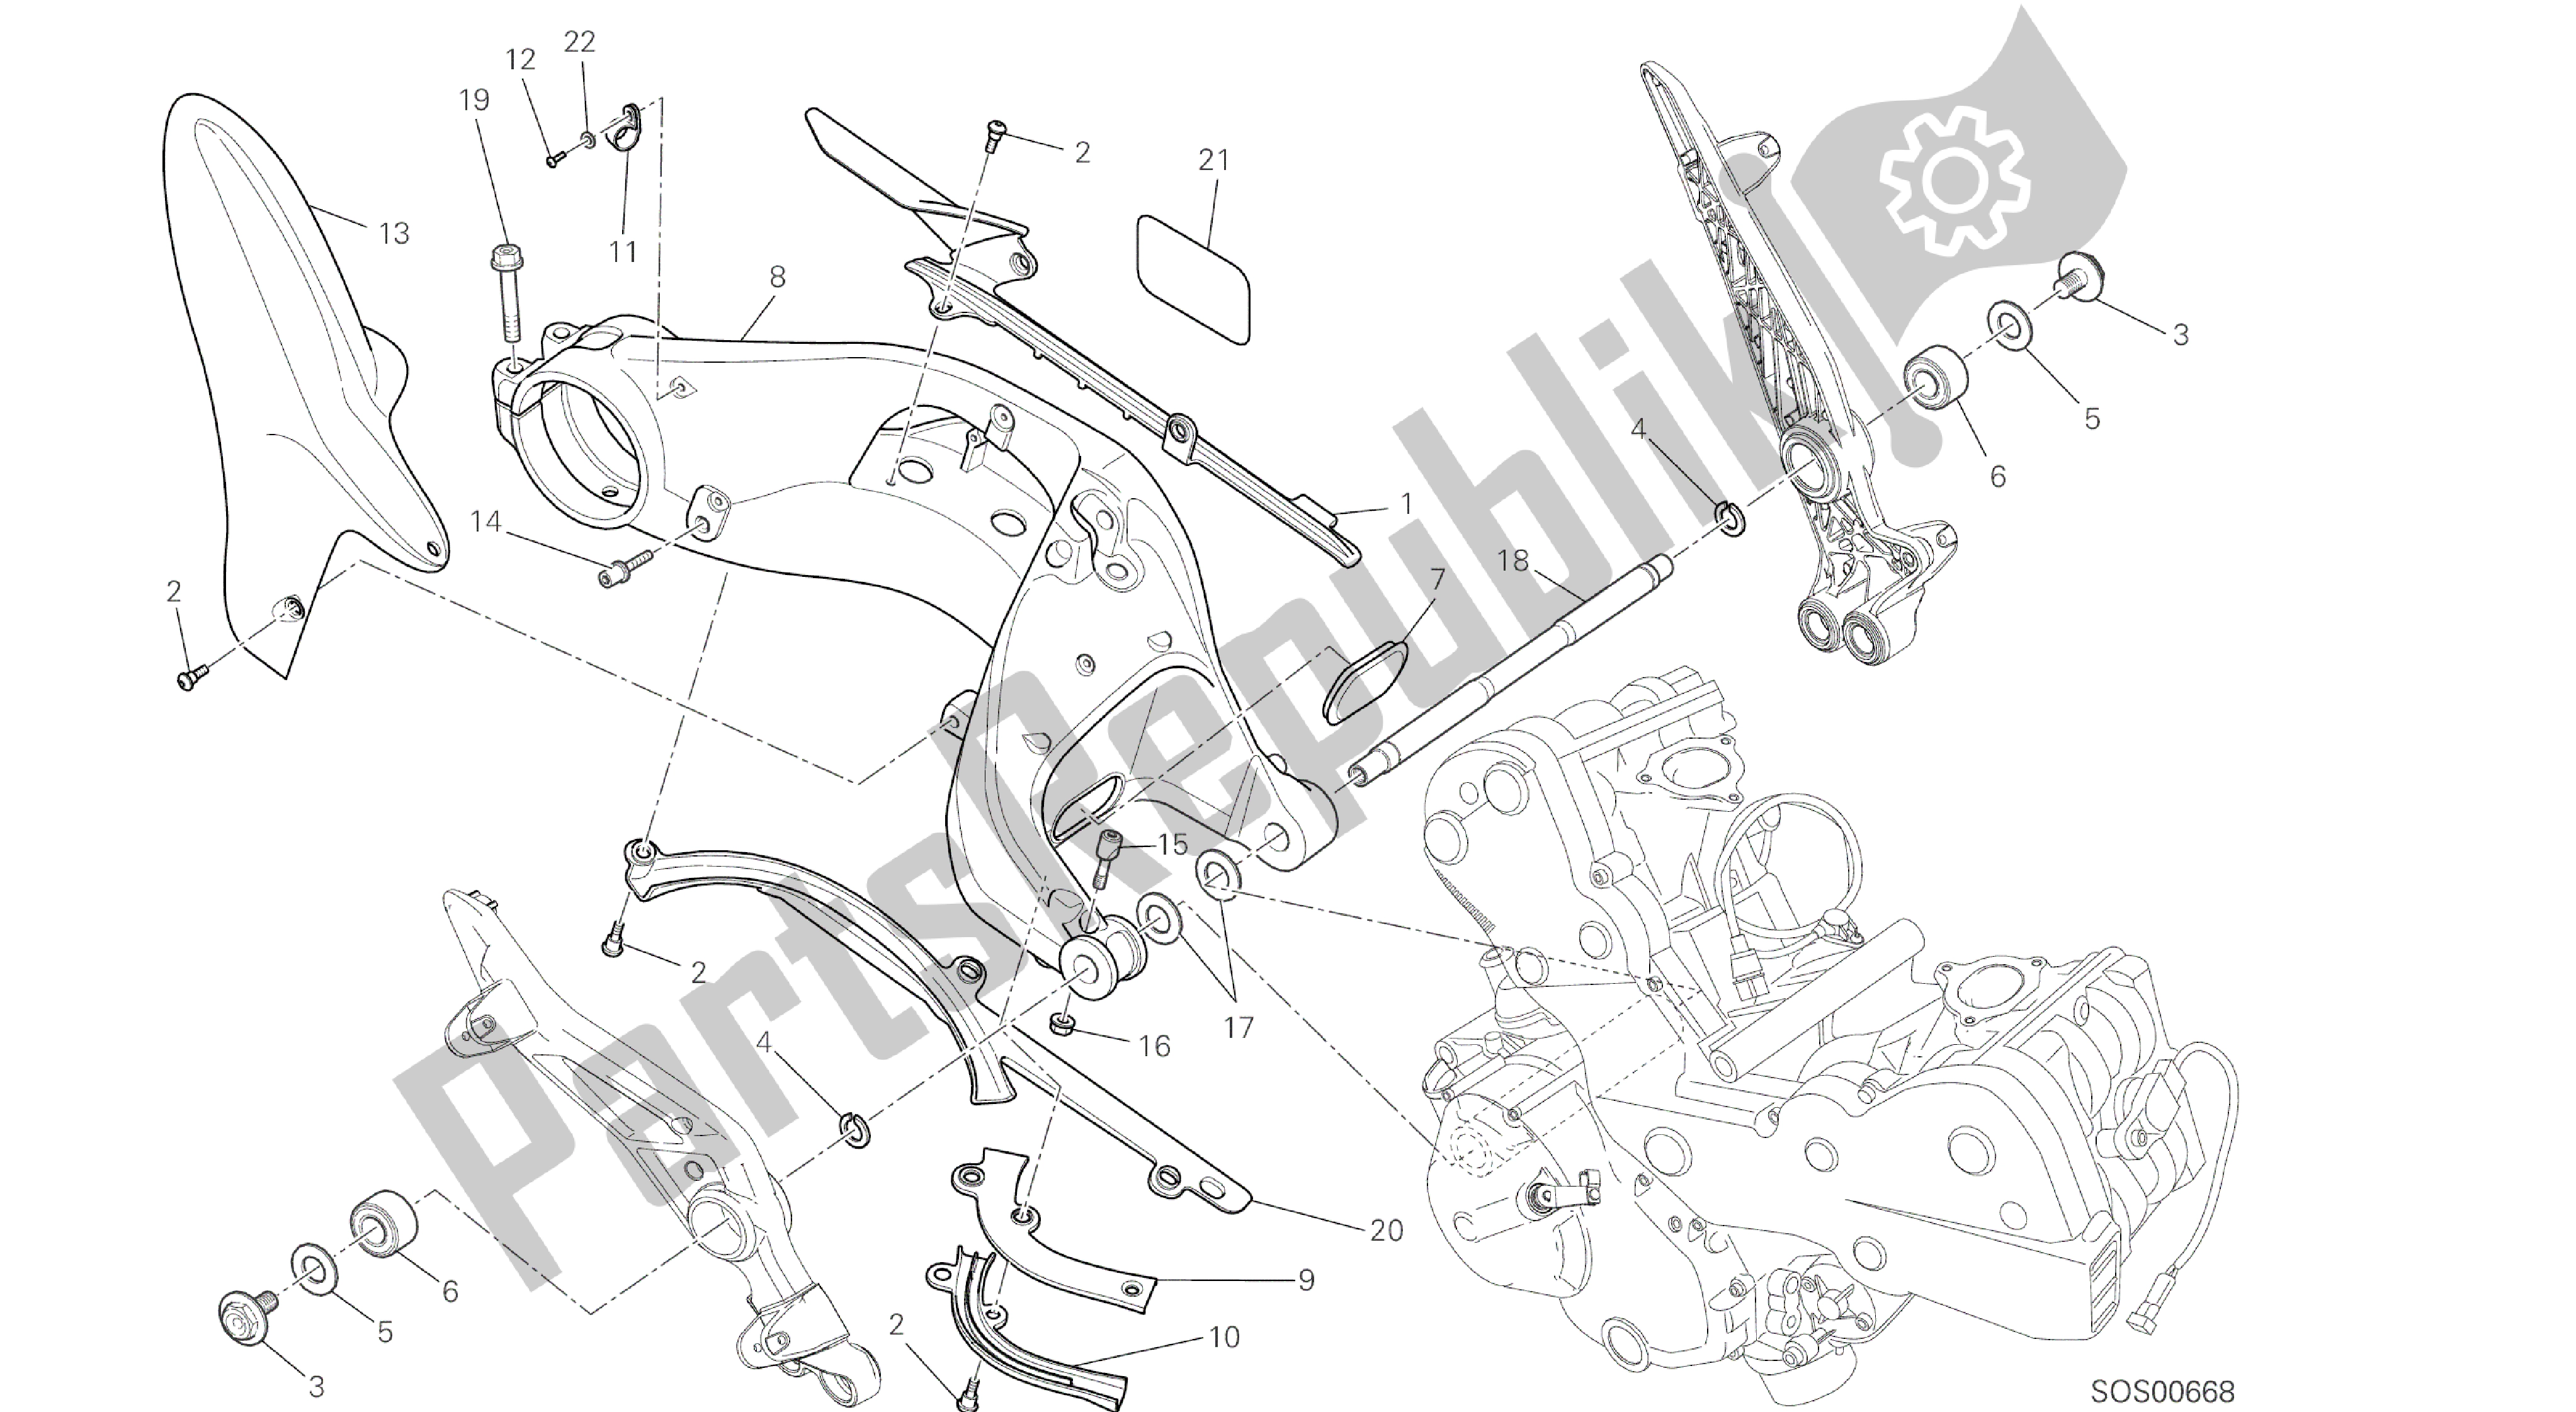 Alle onderdelen voor de Tekening 28a - Forcellone Posteriore [mod: Hym; Xst: Eur, Fra, Jap, Twn] Groepsframe van de Ducati Hypermotard 821 2015